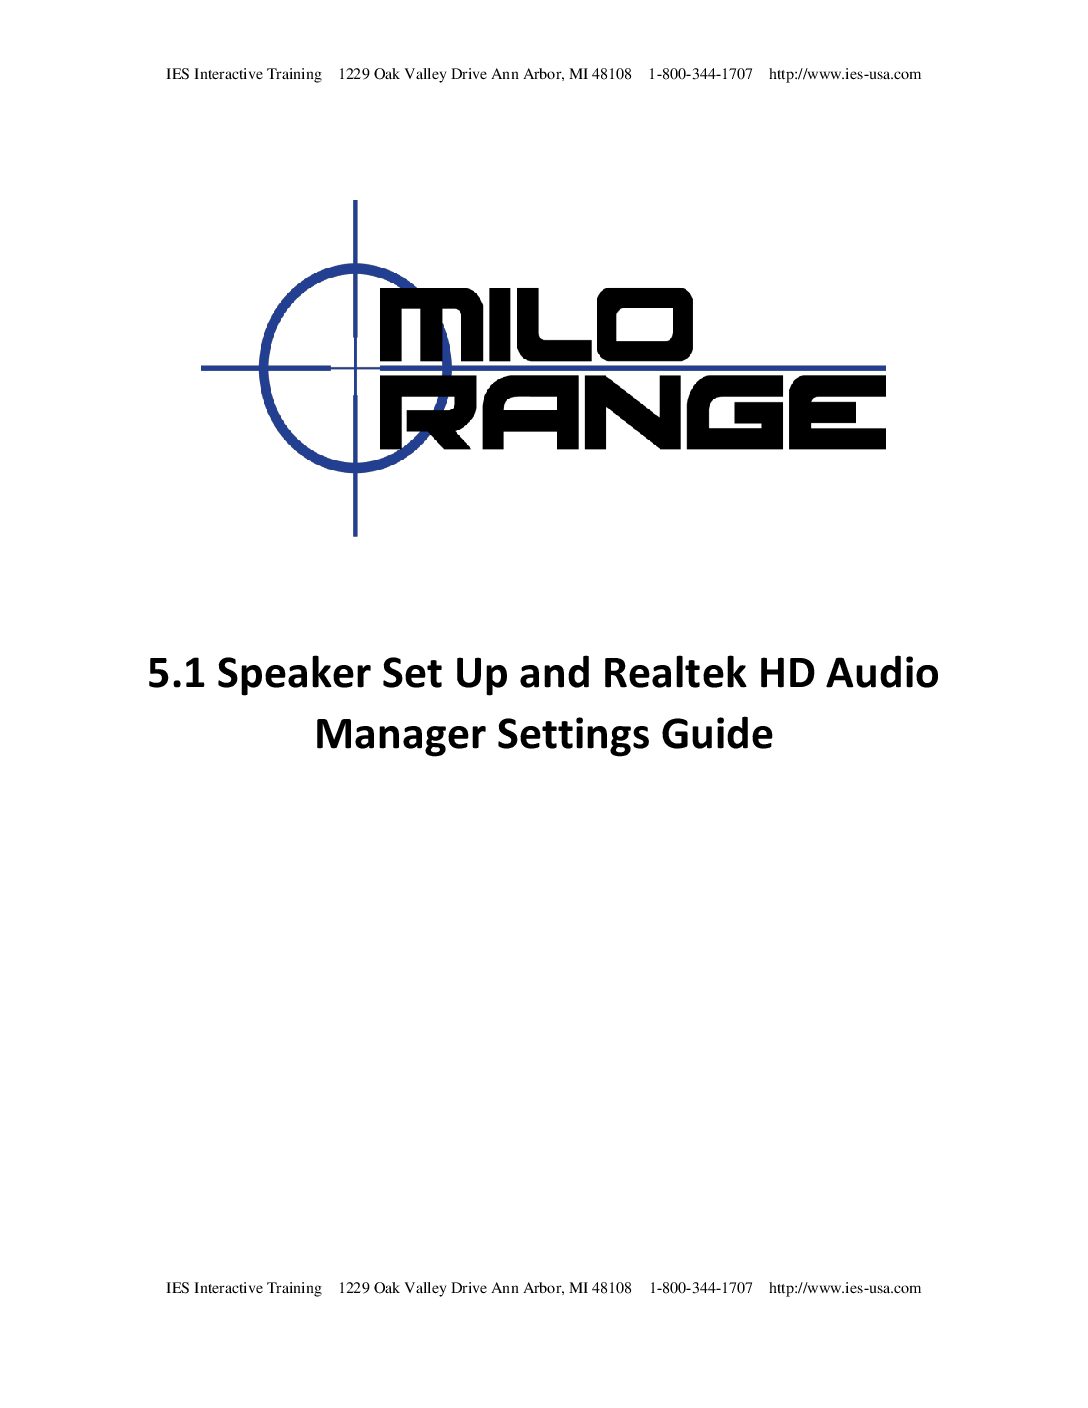 Milo Range 5 1 realtek set up